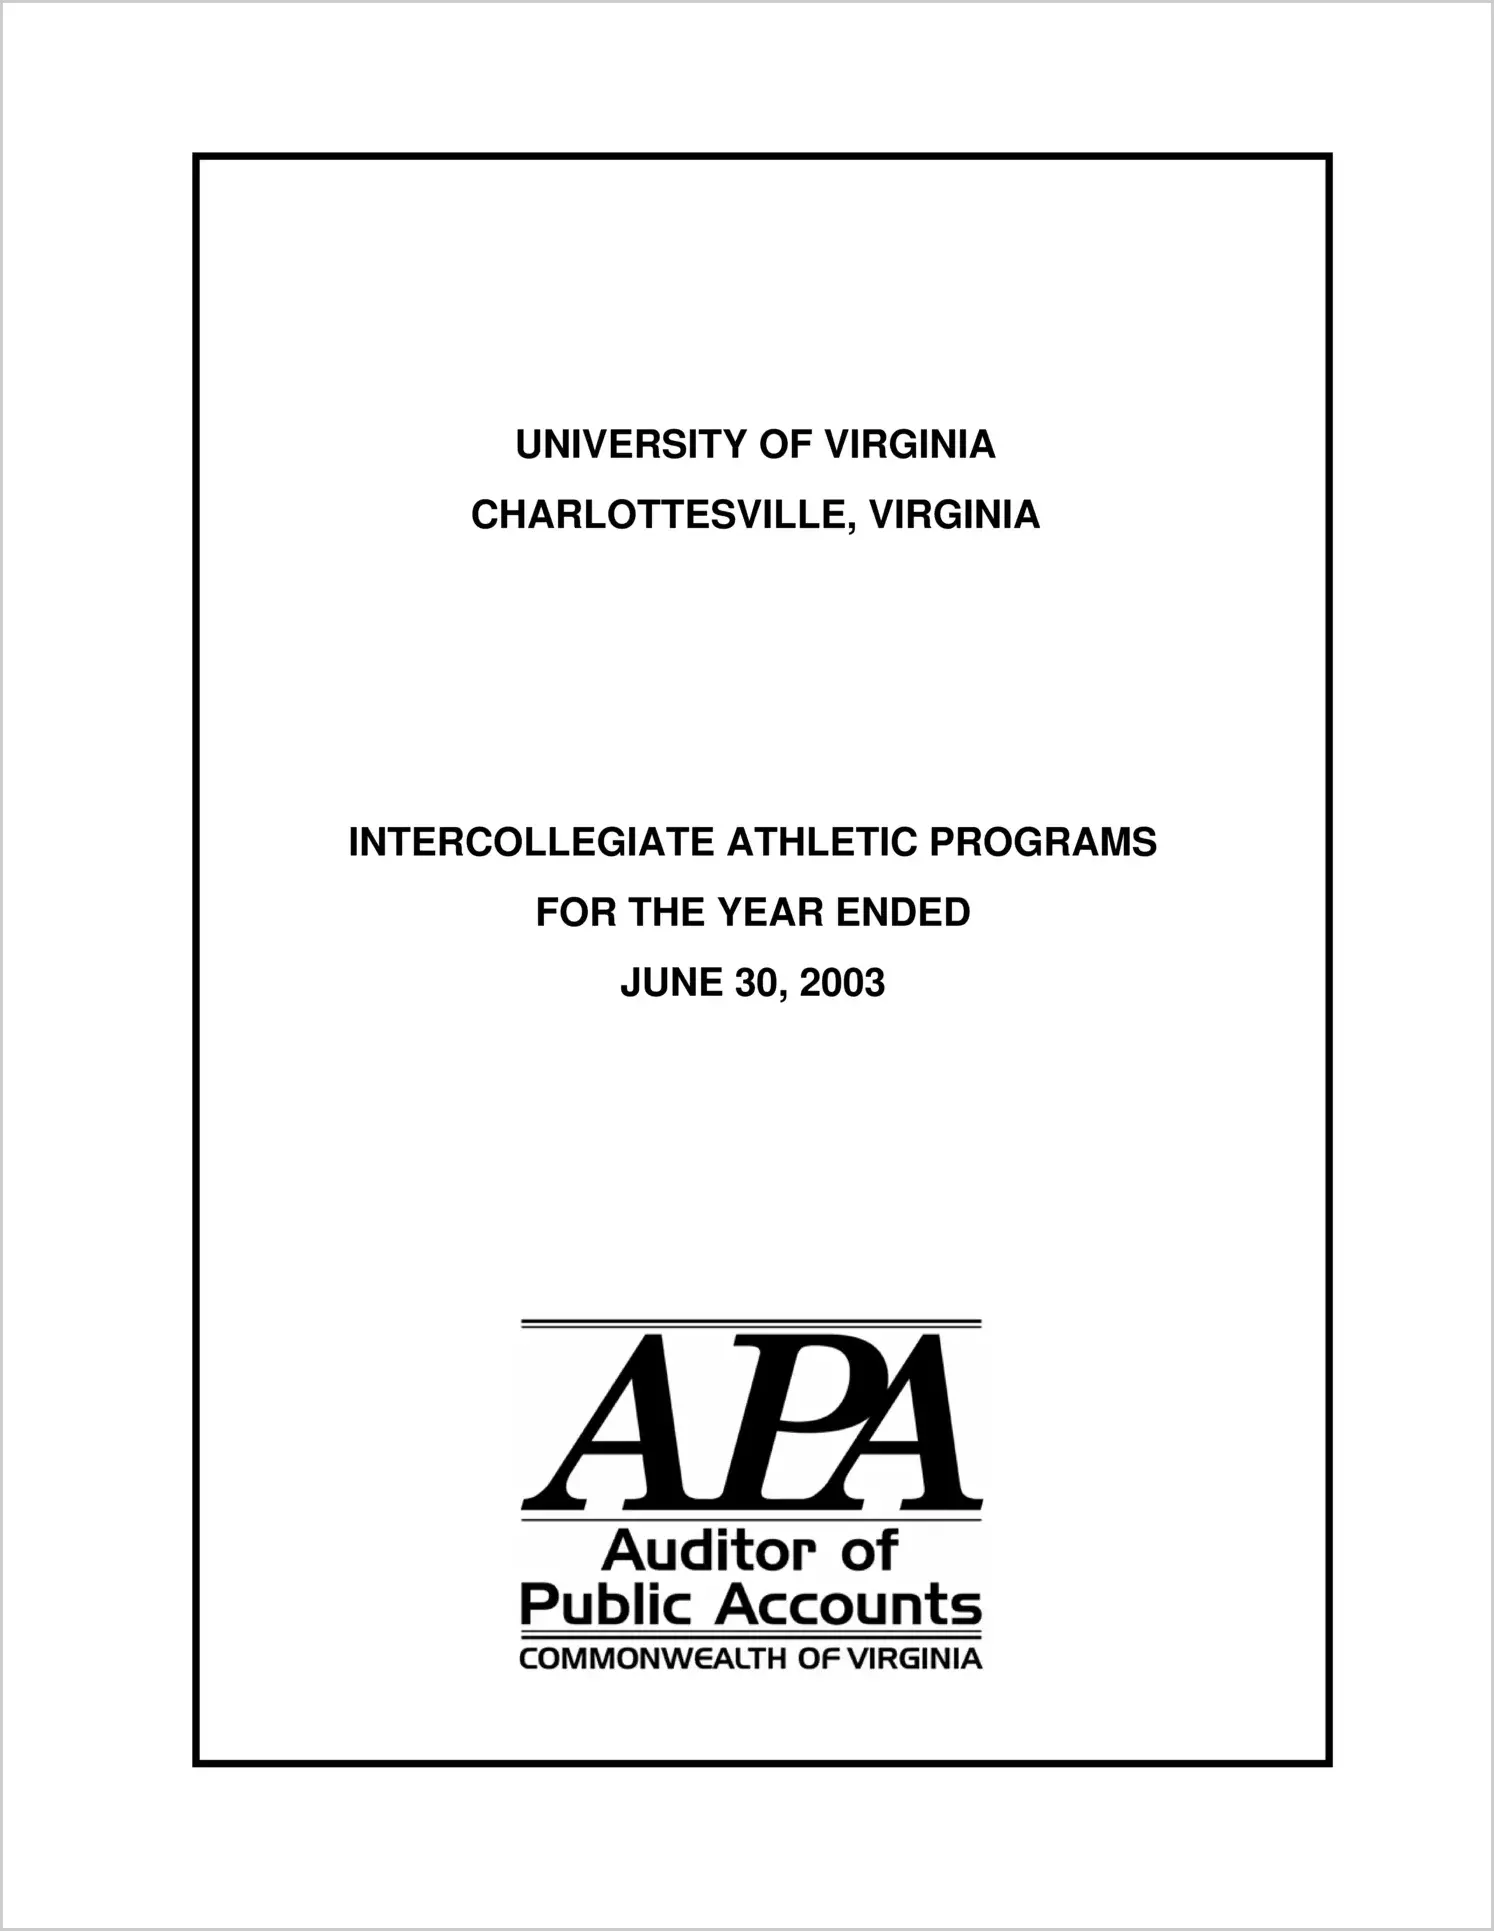 University of Virginia Intercollegiate Athletics Programs for the year ended June 30, 2003